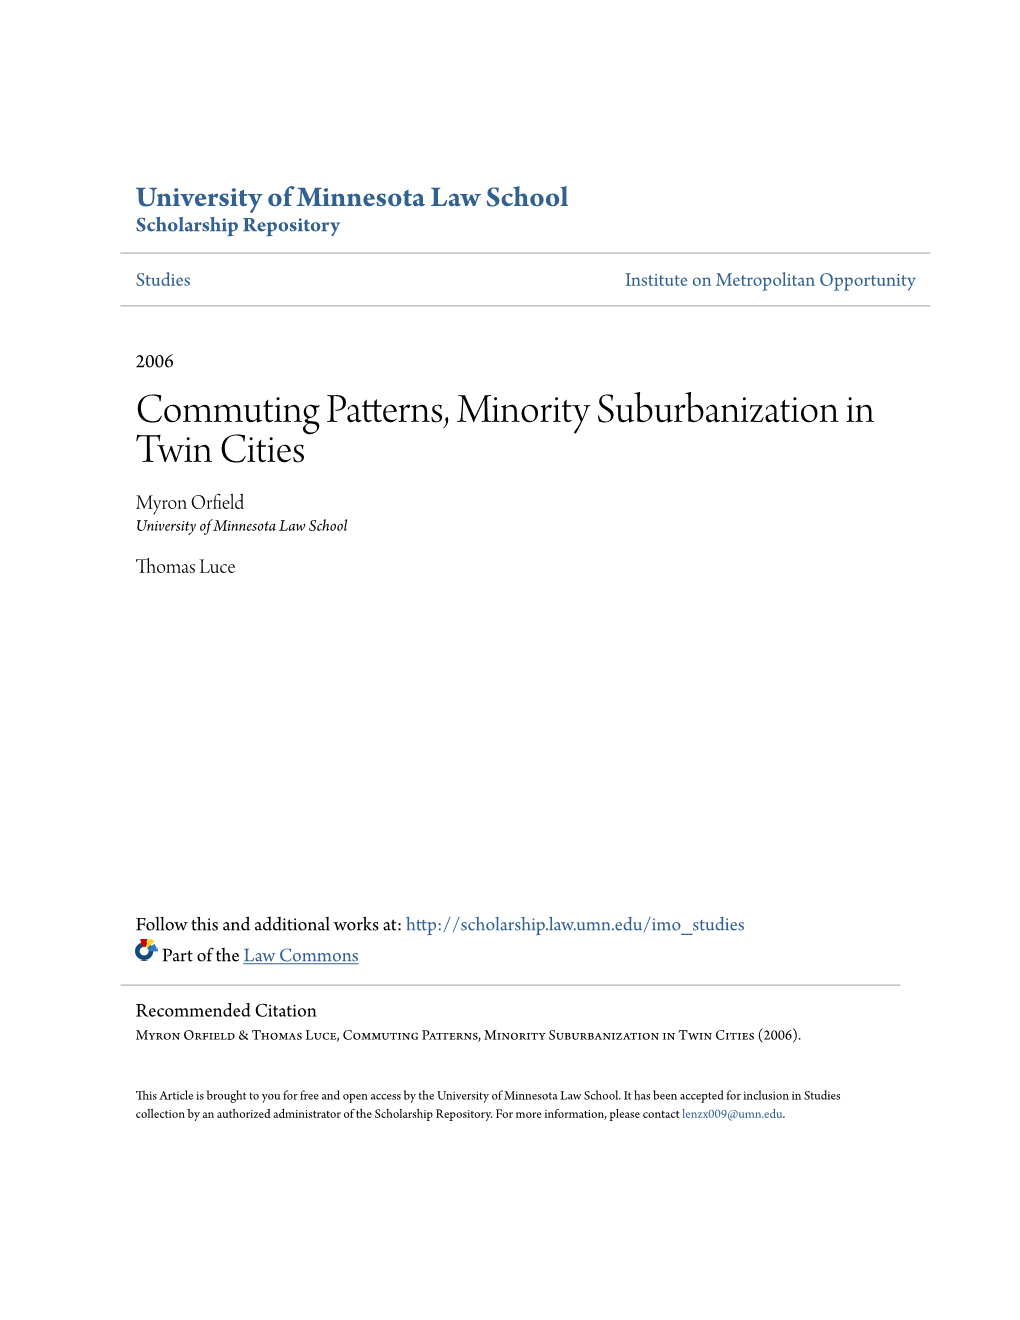 Commuting Patterns, Minority Suburbanization in Twin Cities Myron Orfield University of Minnesota Law School